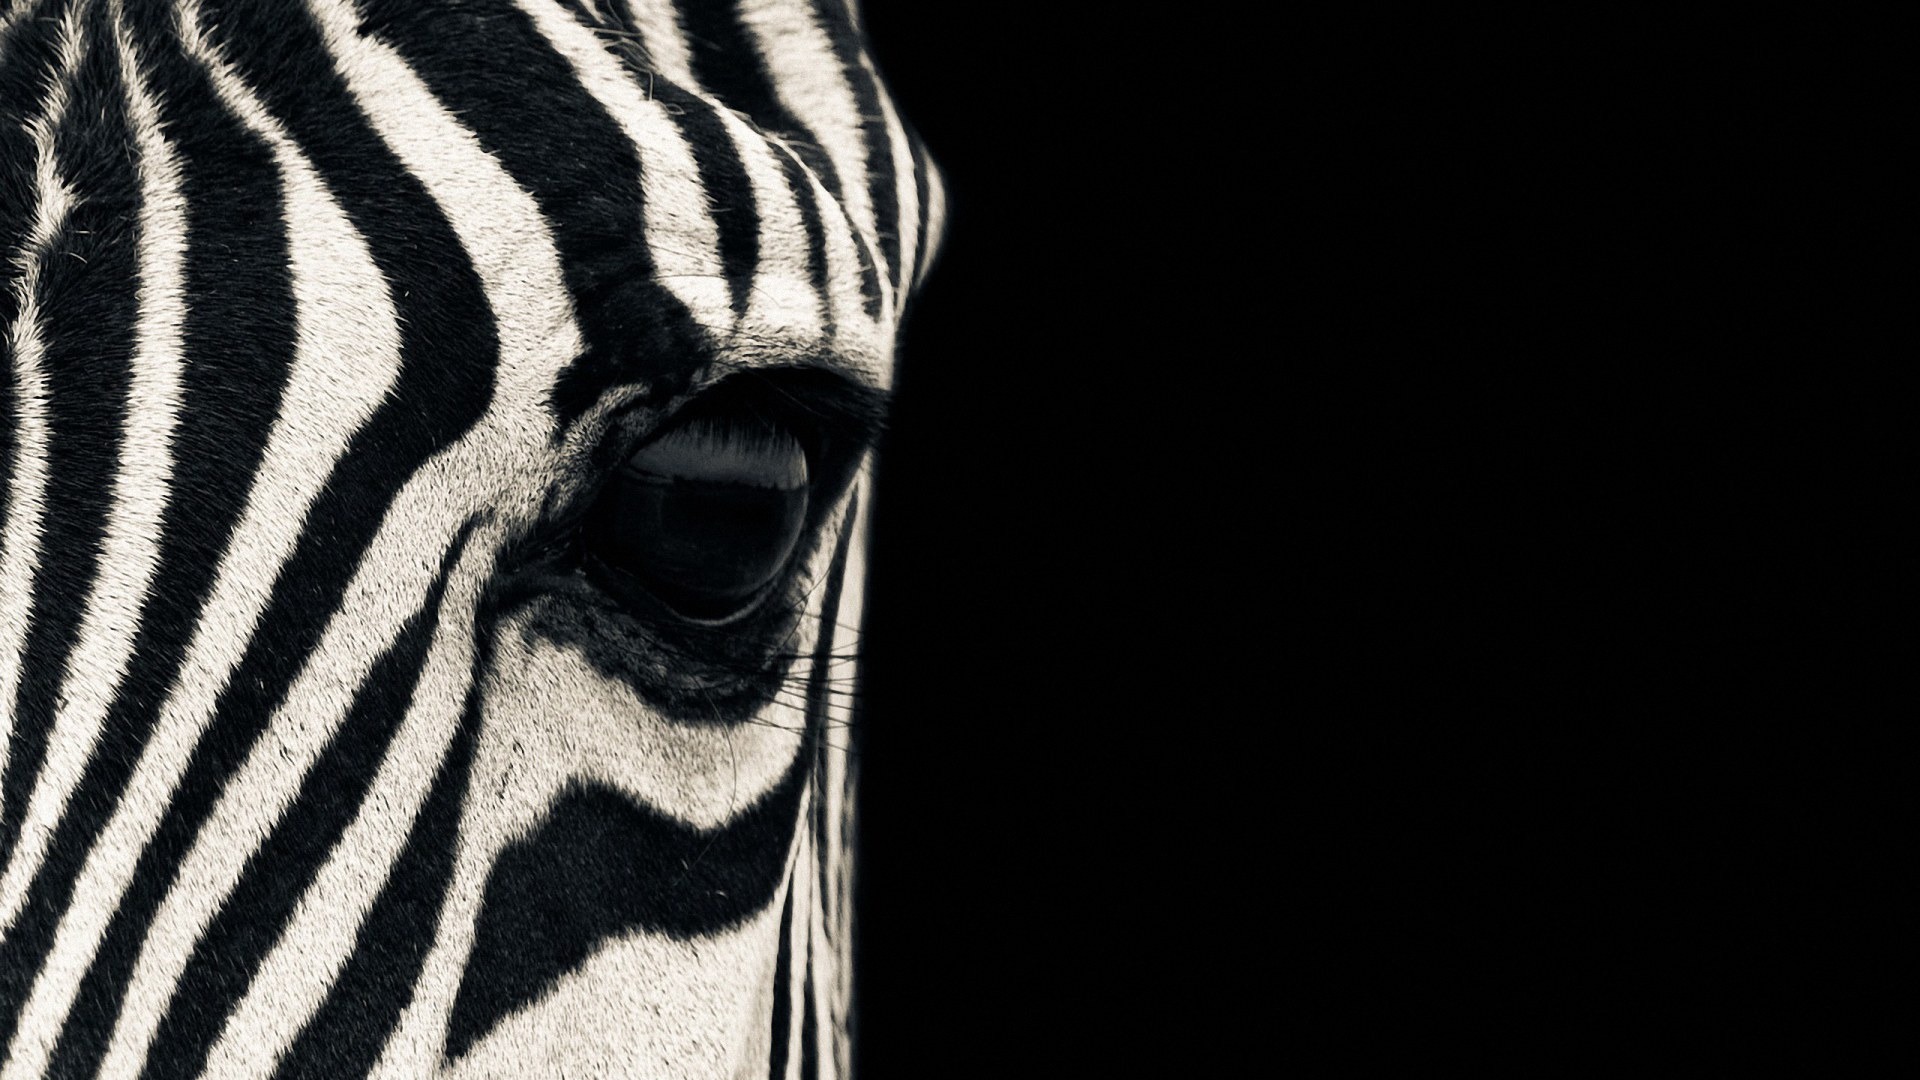 Zebra wallpaper backgrounds download.